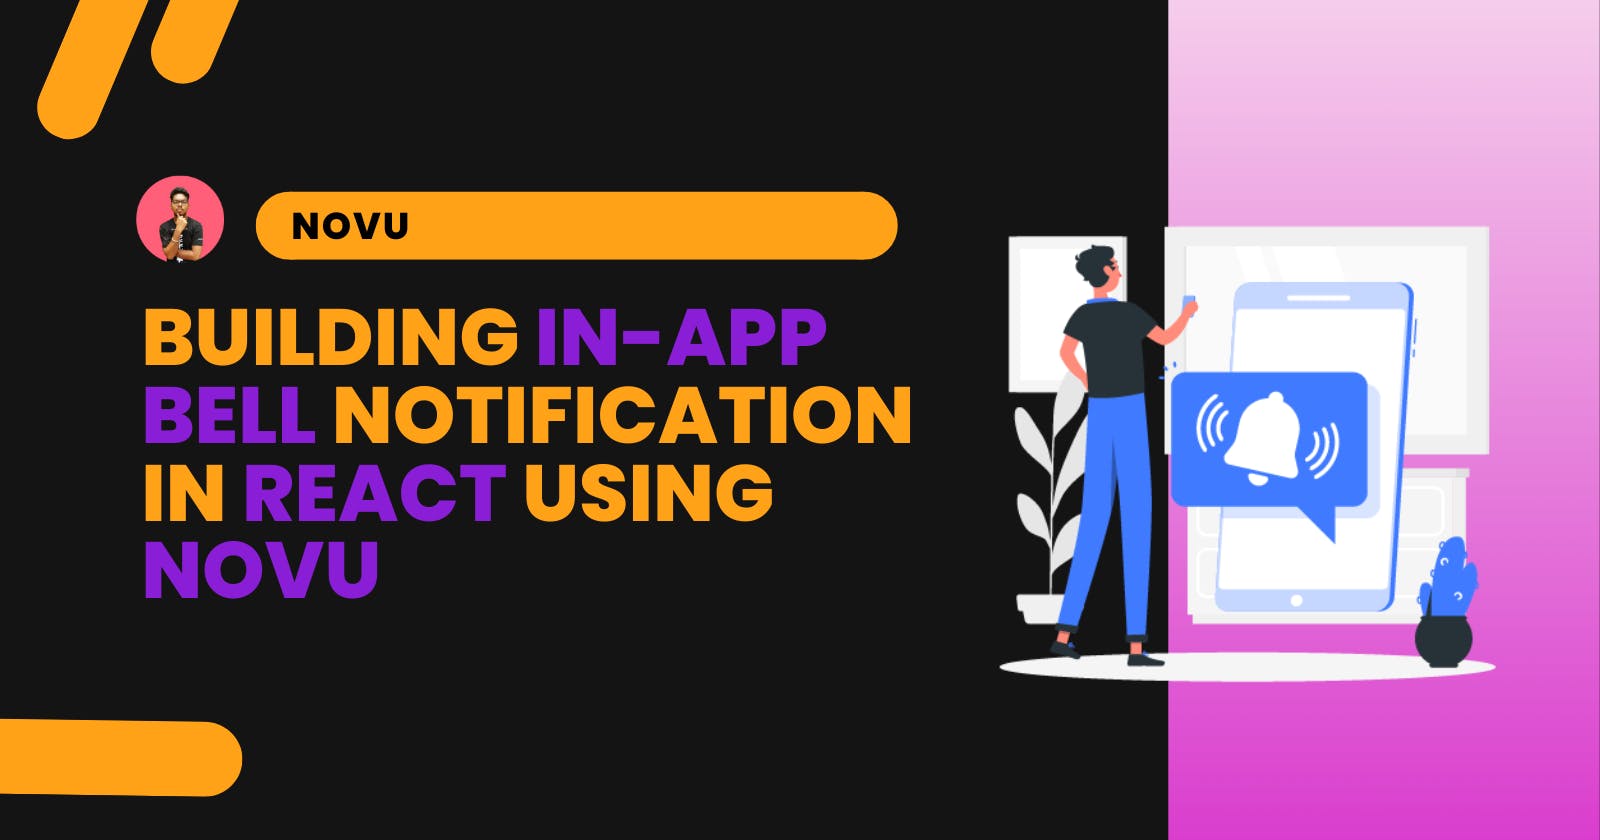 Building an In-App Bell Notification in React using Novu